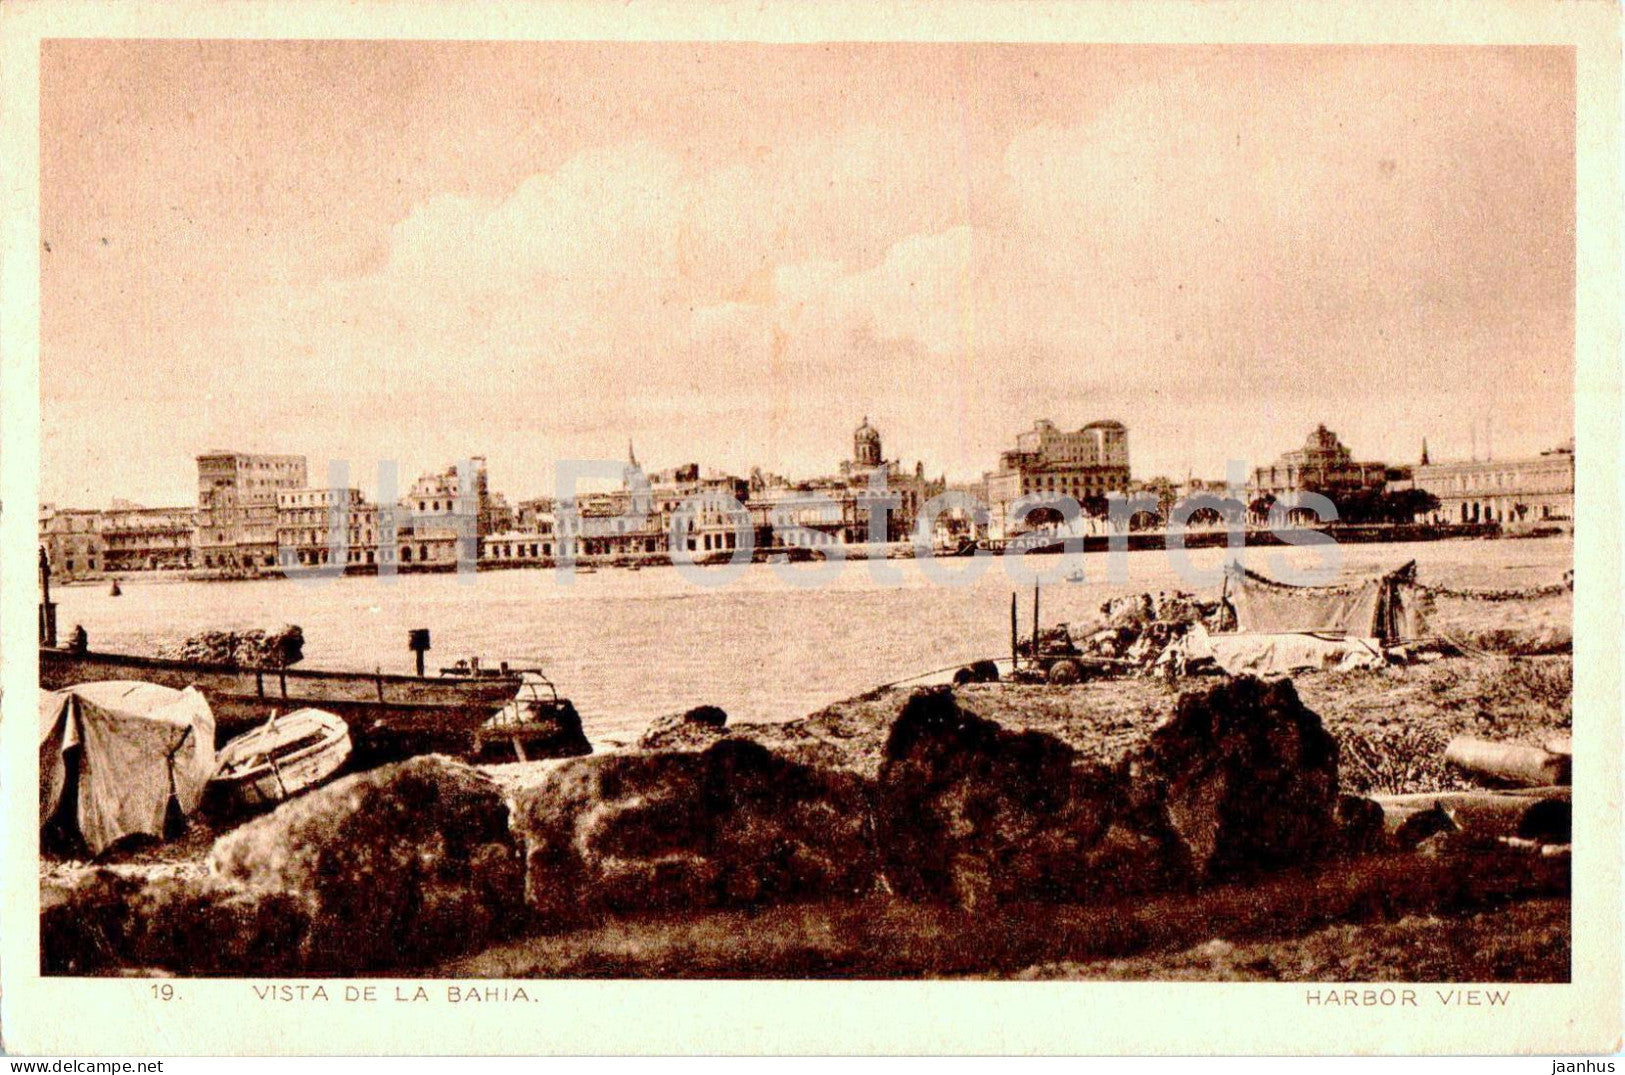 Vista de la Bahia - Harbor View - 19 - old postcard - 1933 - Cuba - used - JH Postcards